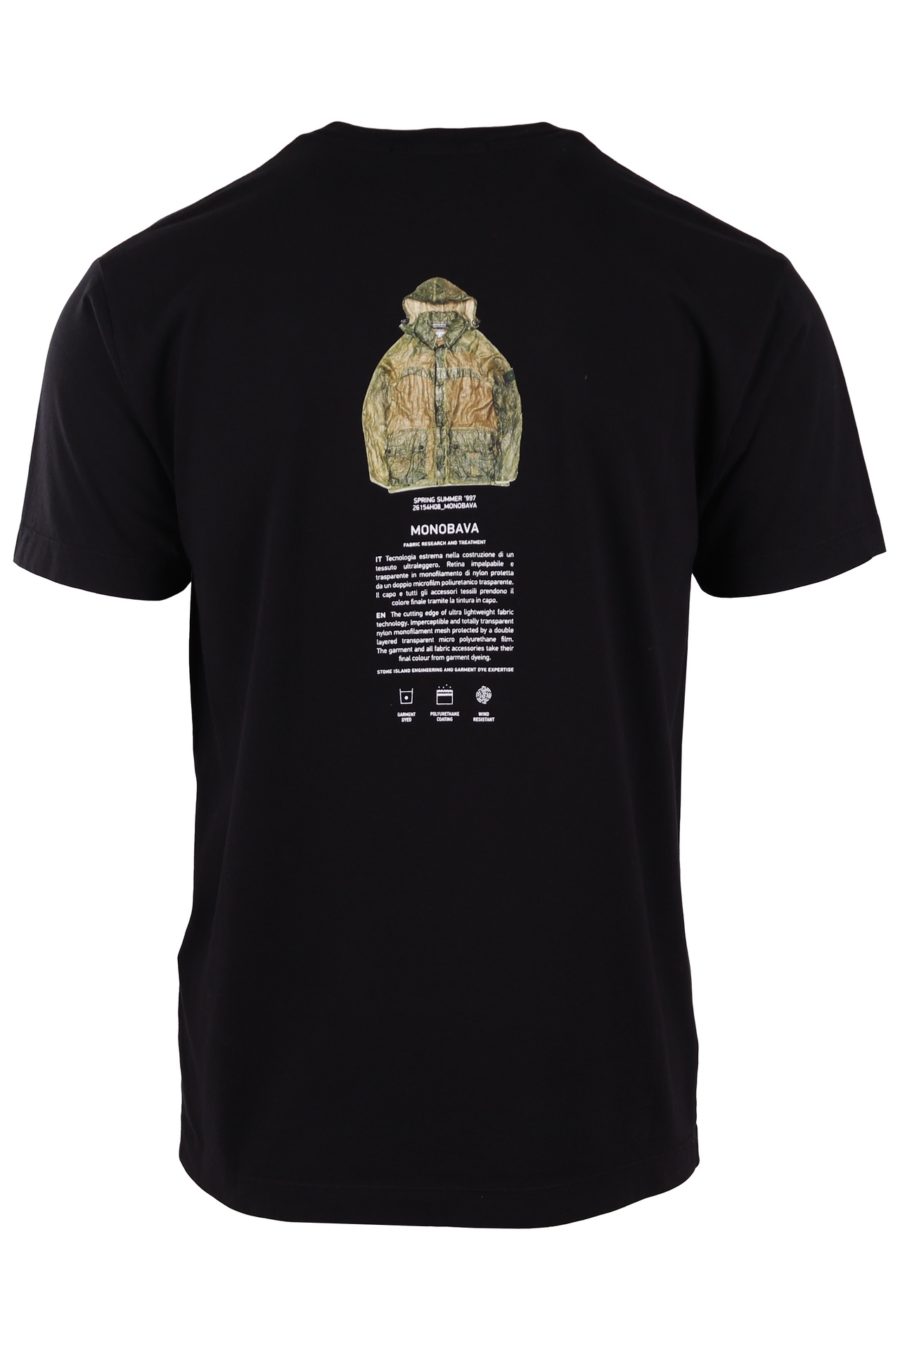 T-shirt Stone Island schwarz mit Logo "archivio" - 22d5c84adfa677dabd0422034ff84f27f78f2575